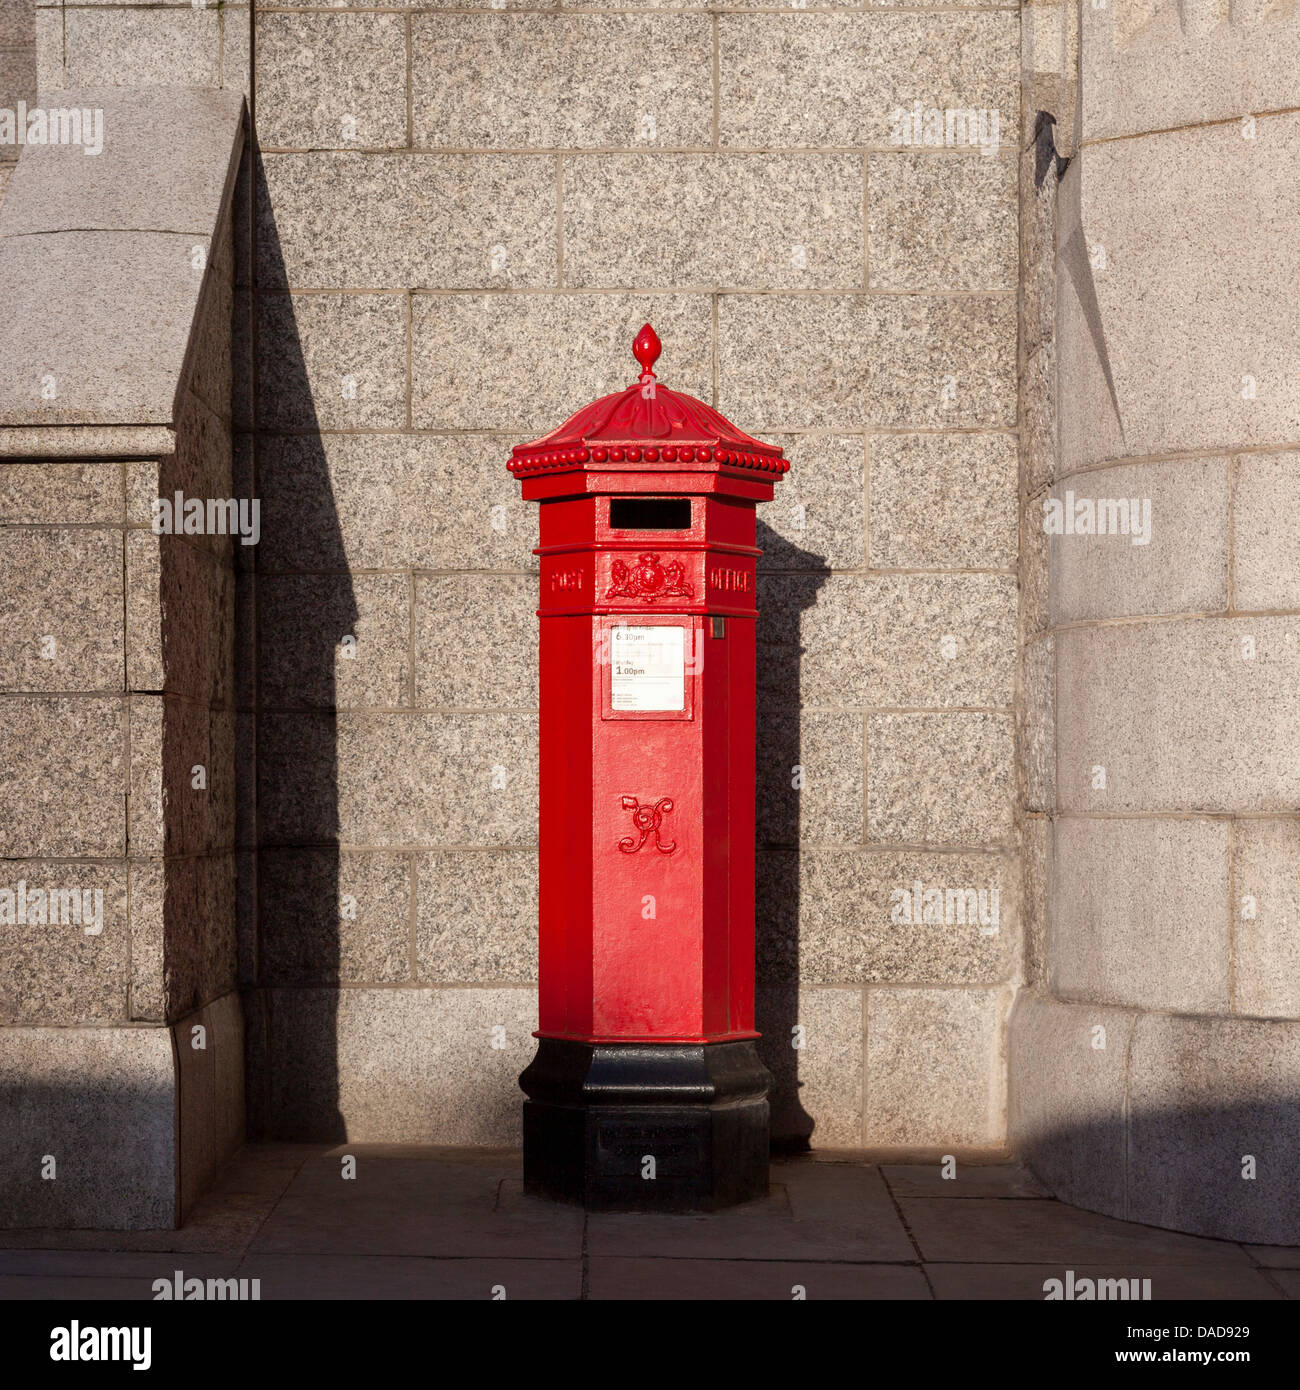 Red post box, London, UK Stock Photo